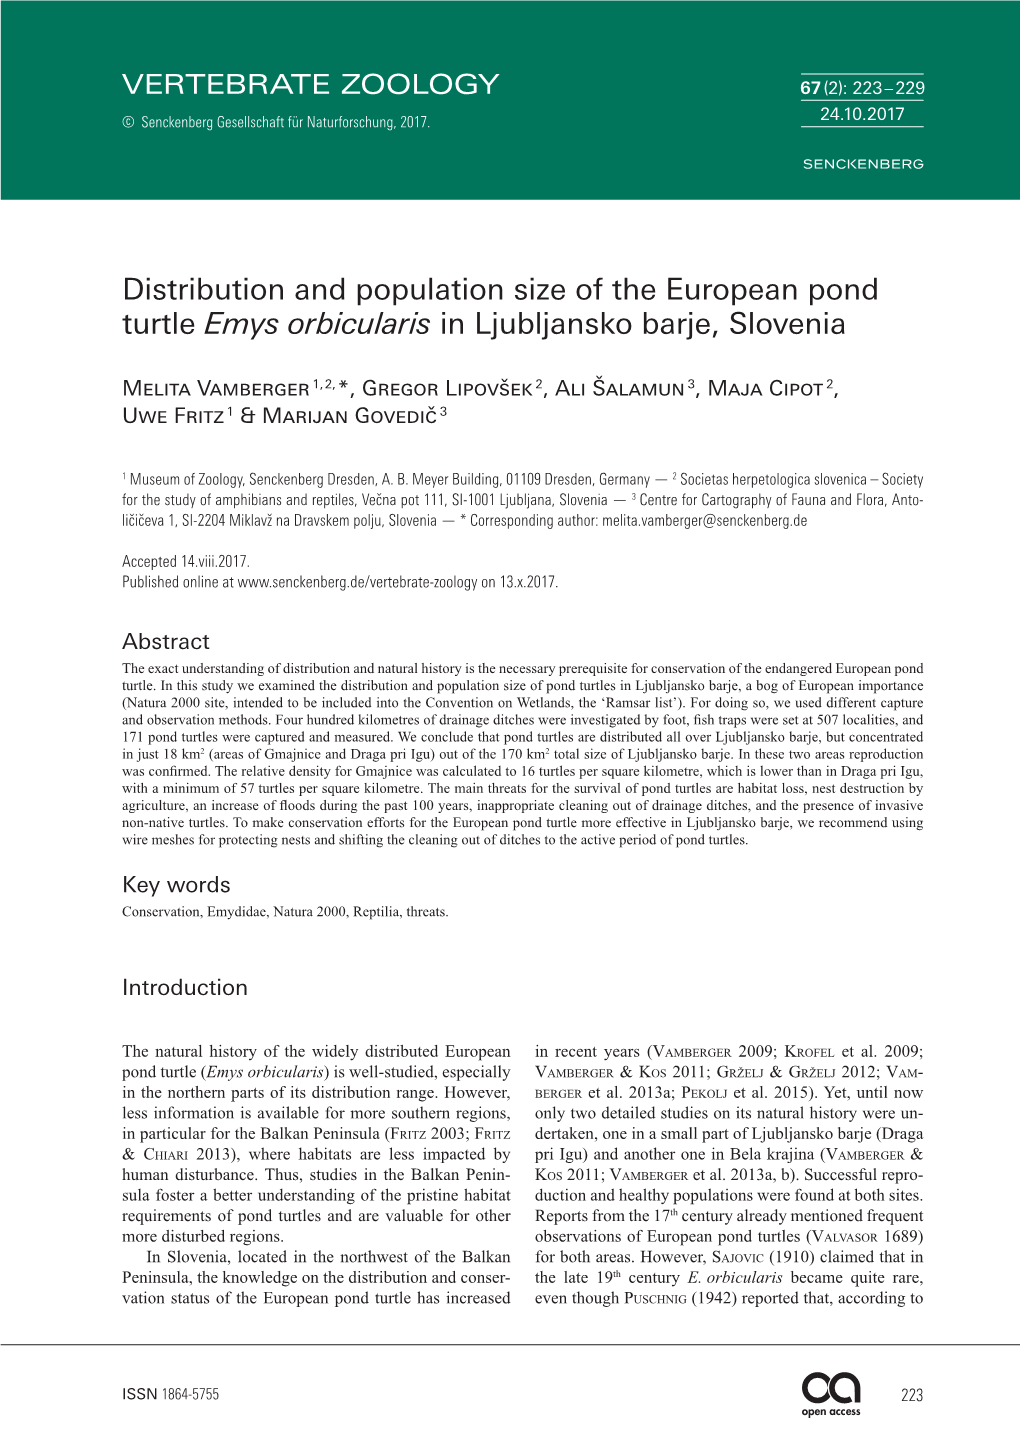 Distribution and Population Size of the European Pond Turtle Emys Orbicularis in Ljubljansko Barje, Slovenia